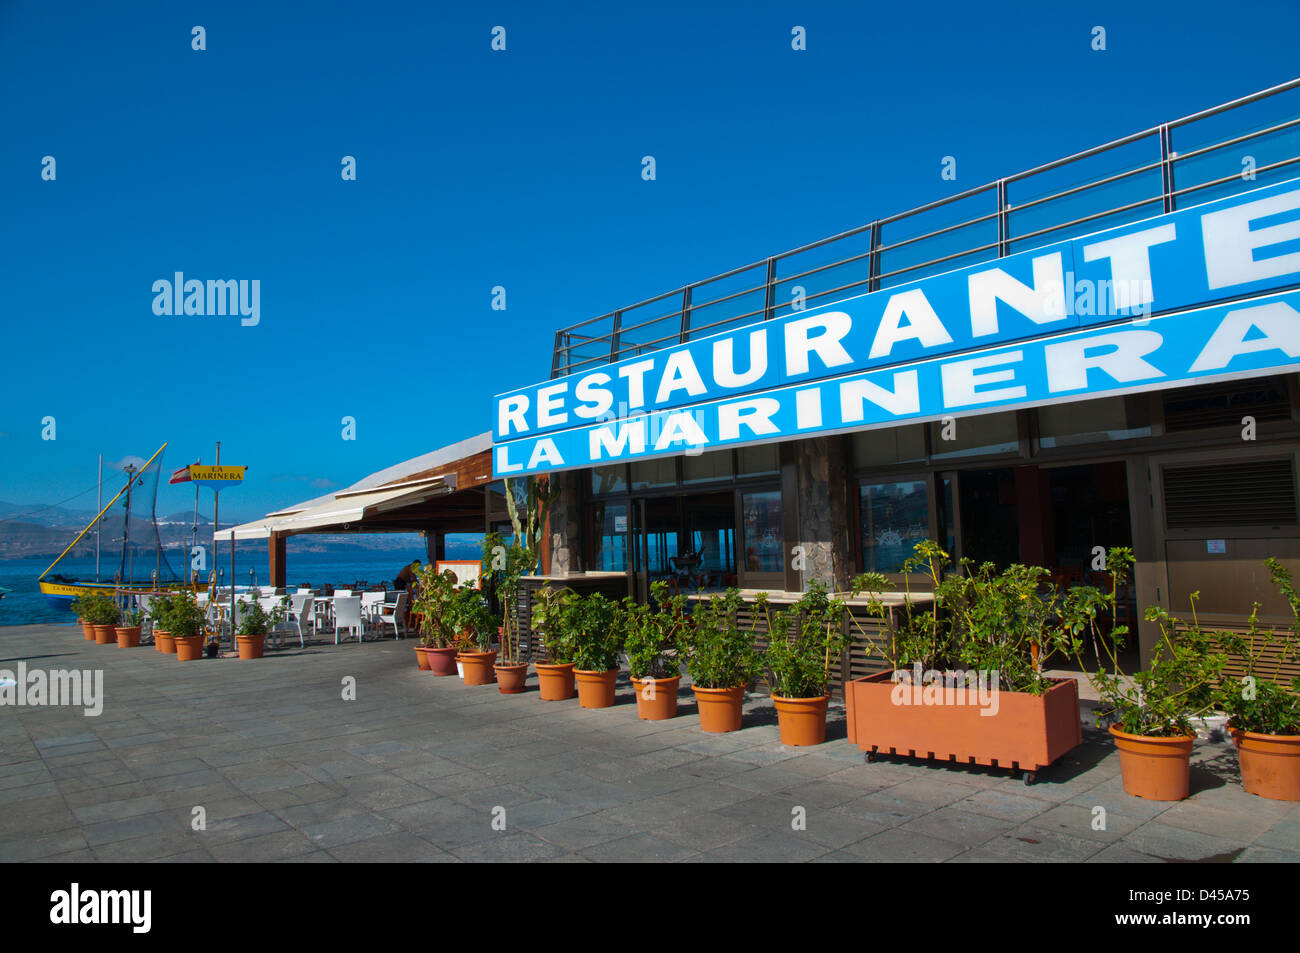 La marinera restaurant hi-res stock photography and images - Alamy